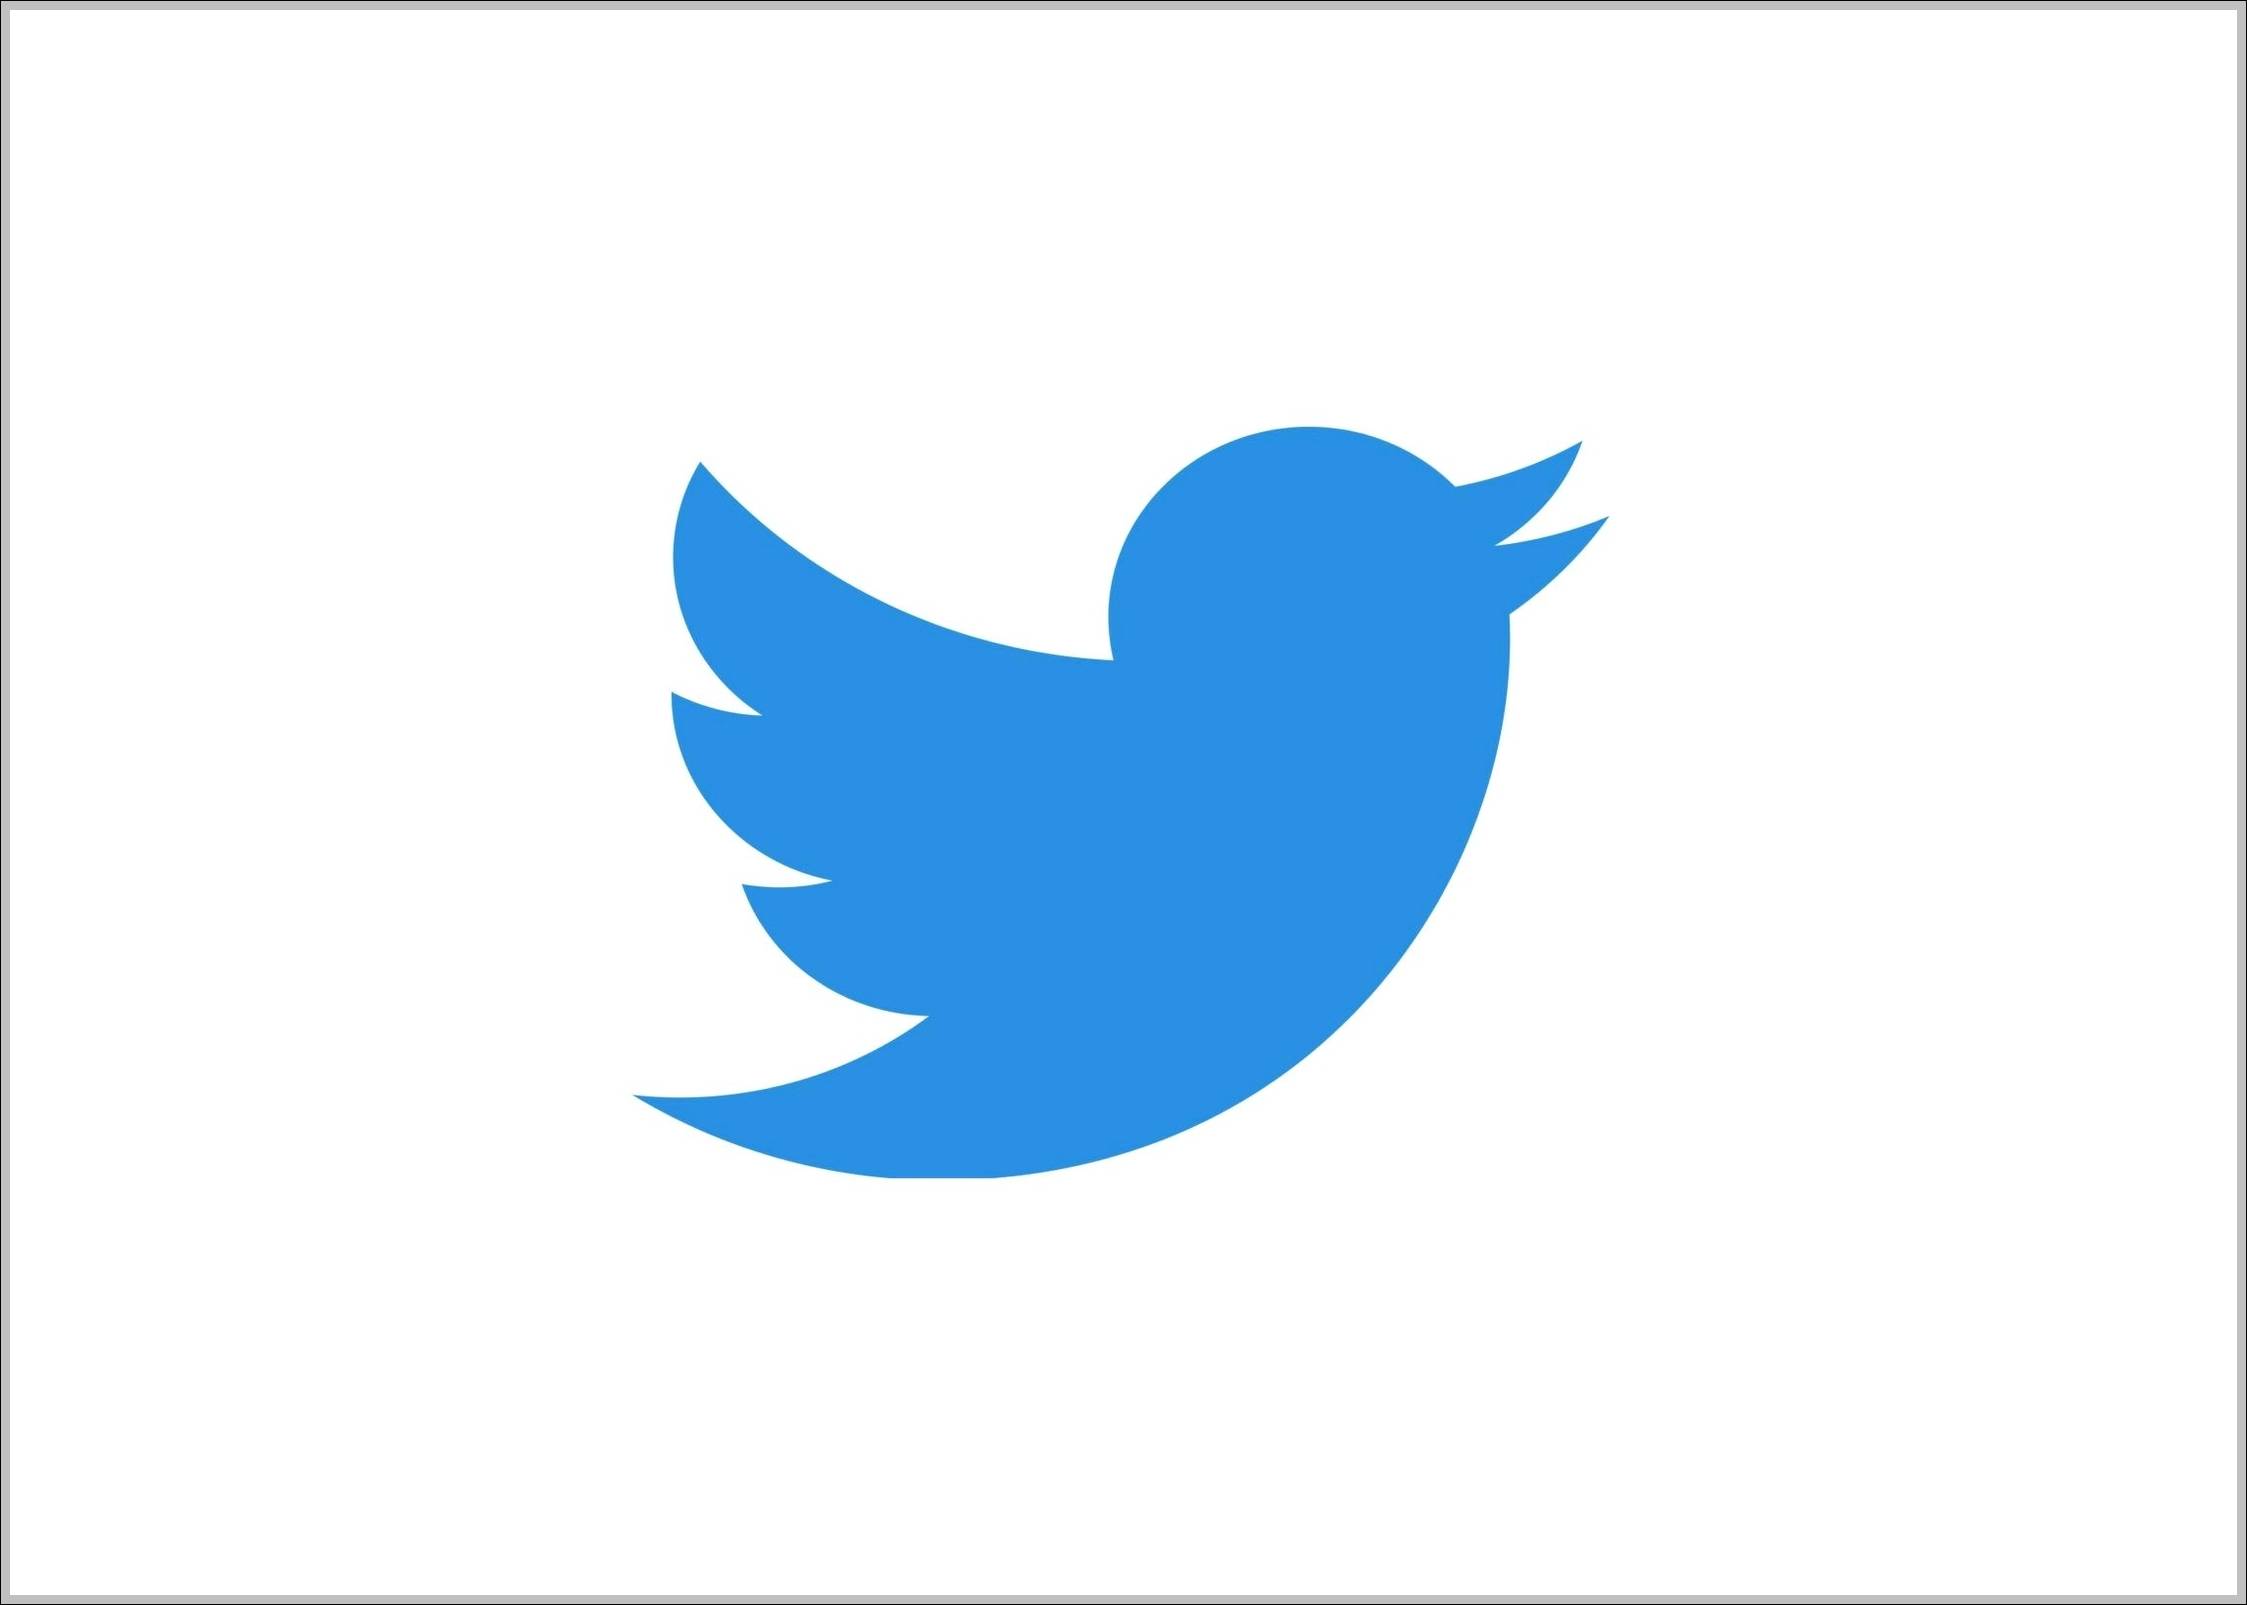 Twitter logo bird logo 2012